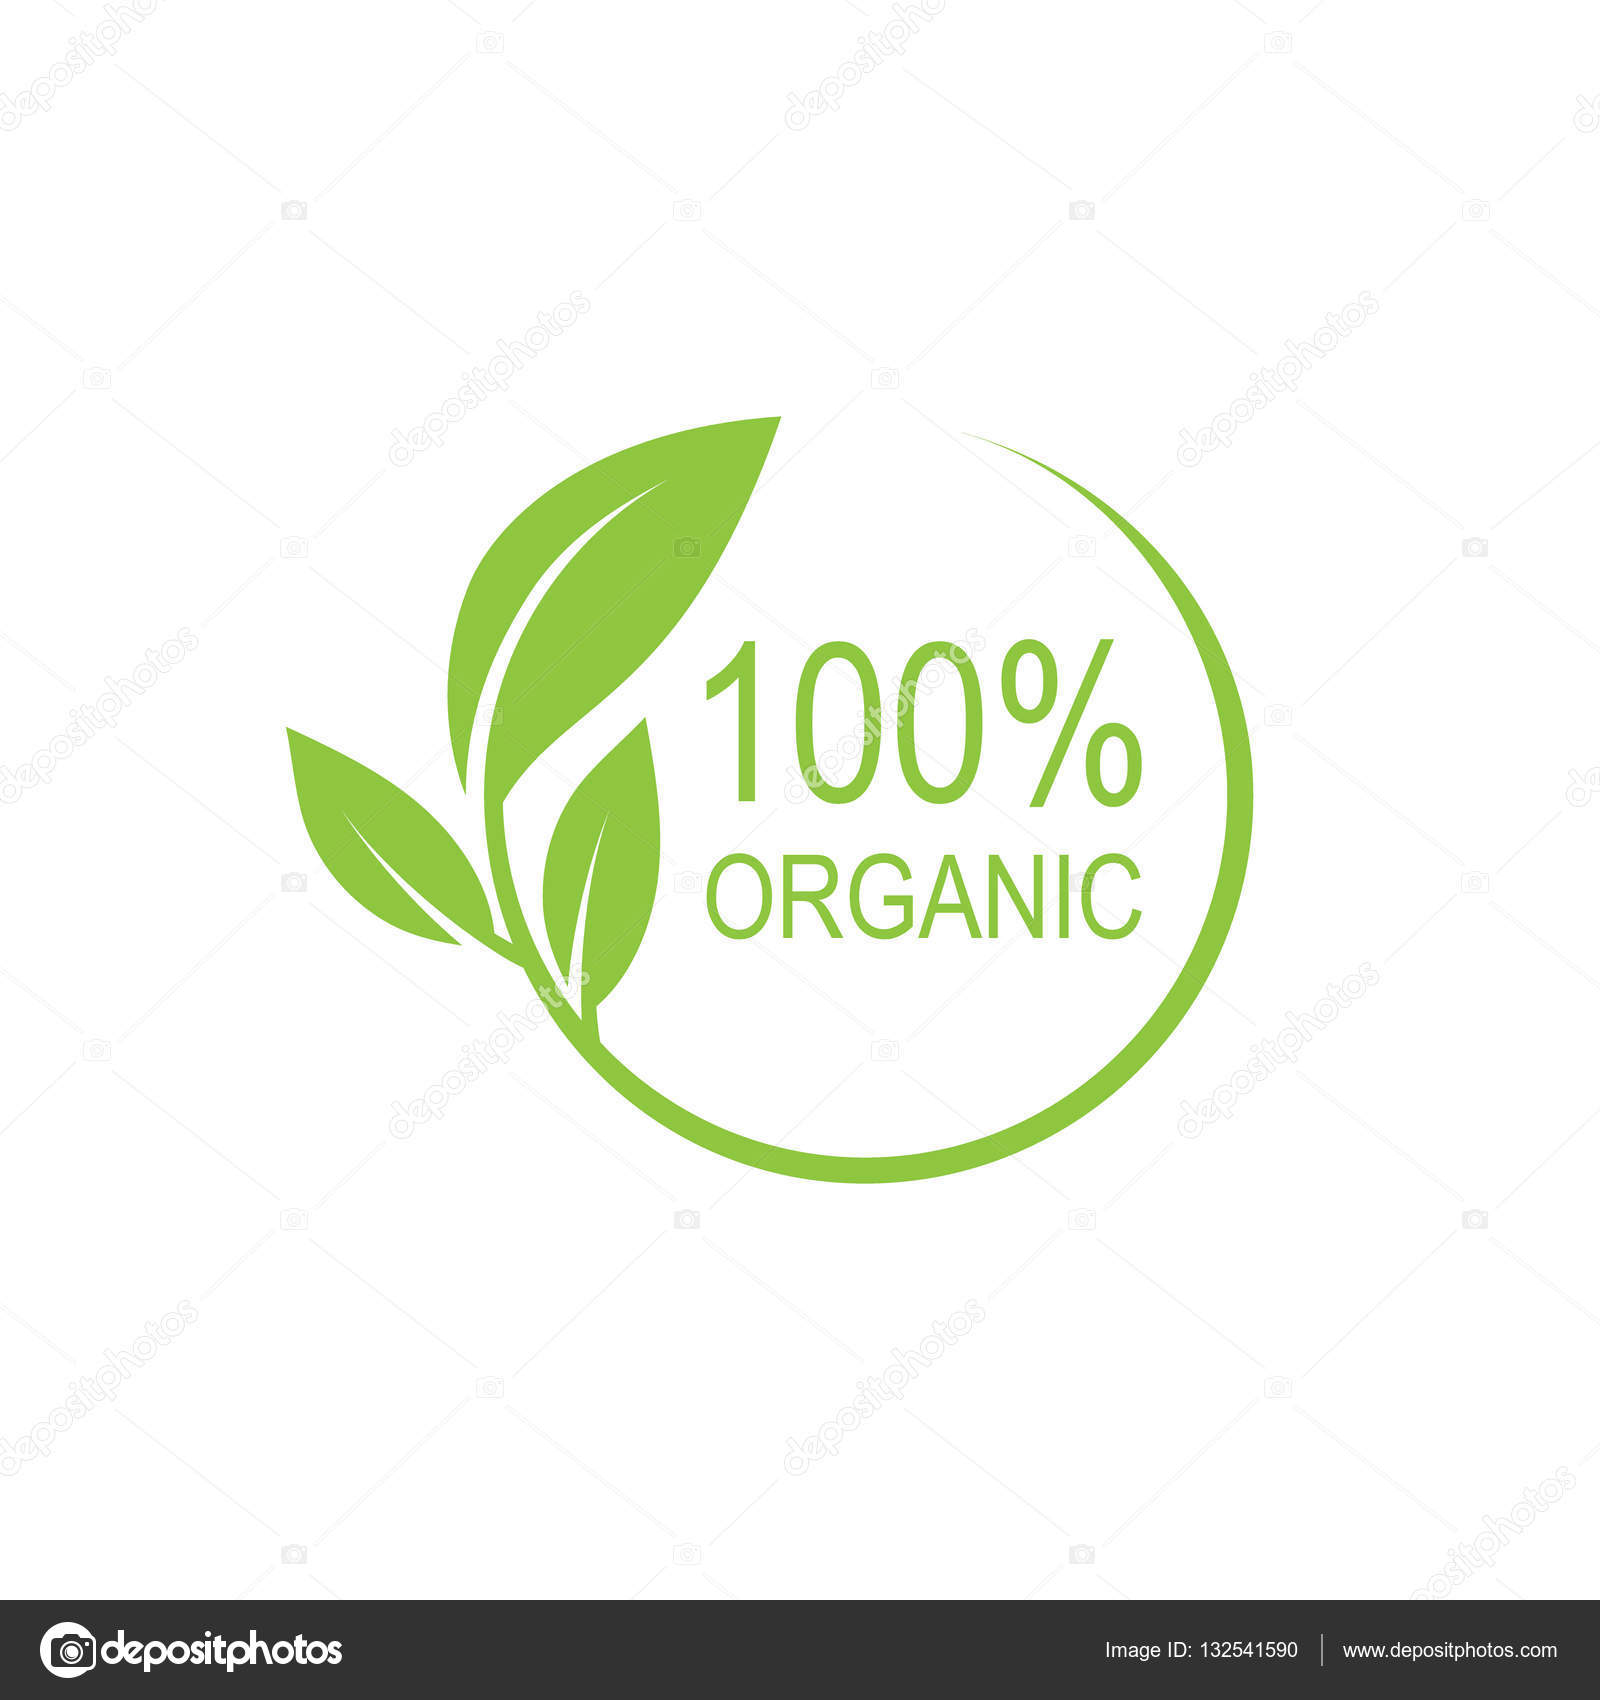 organic-logo-design